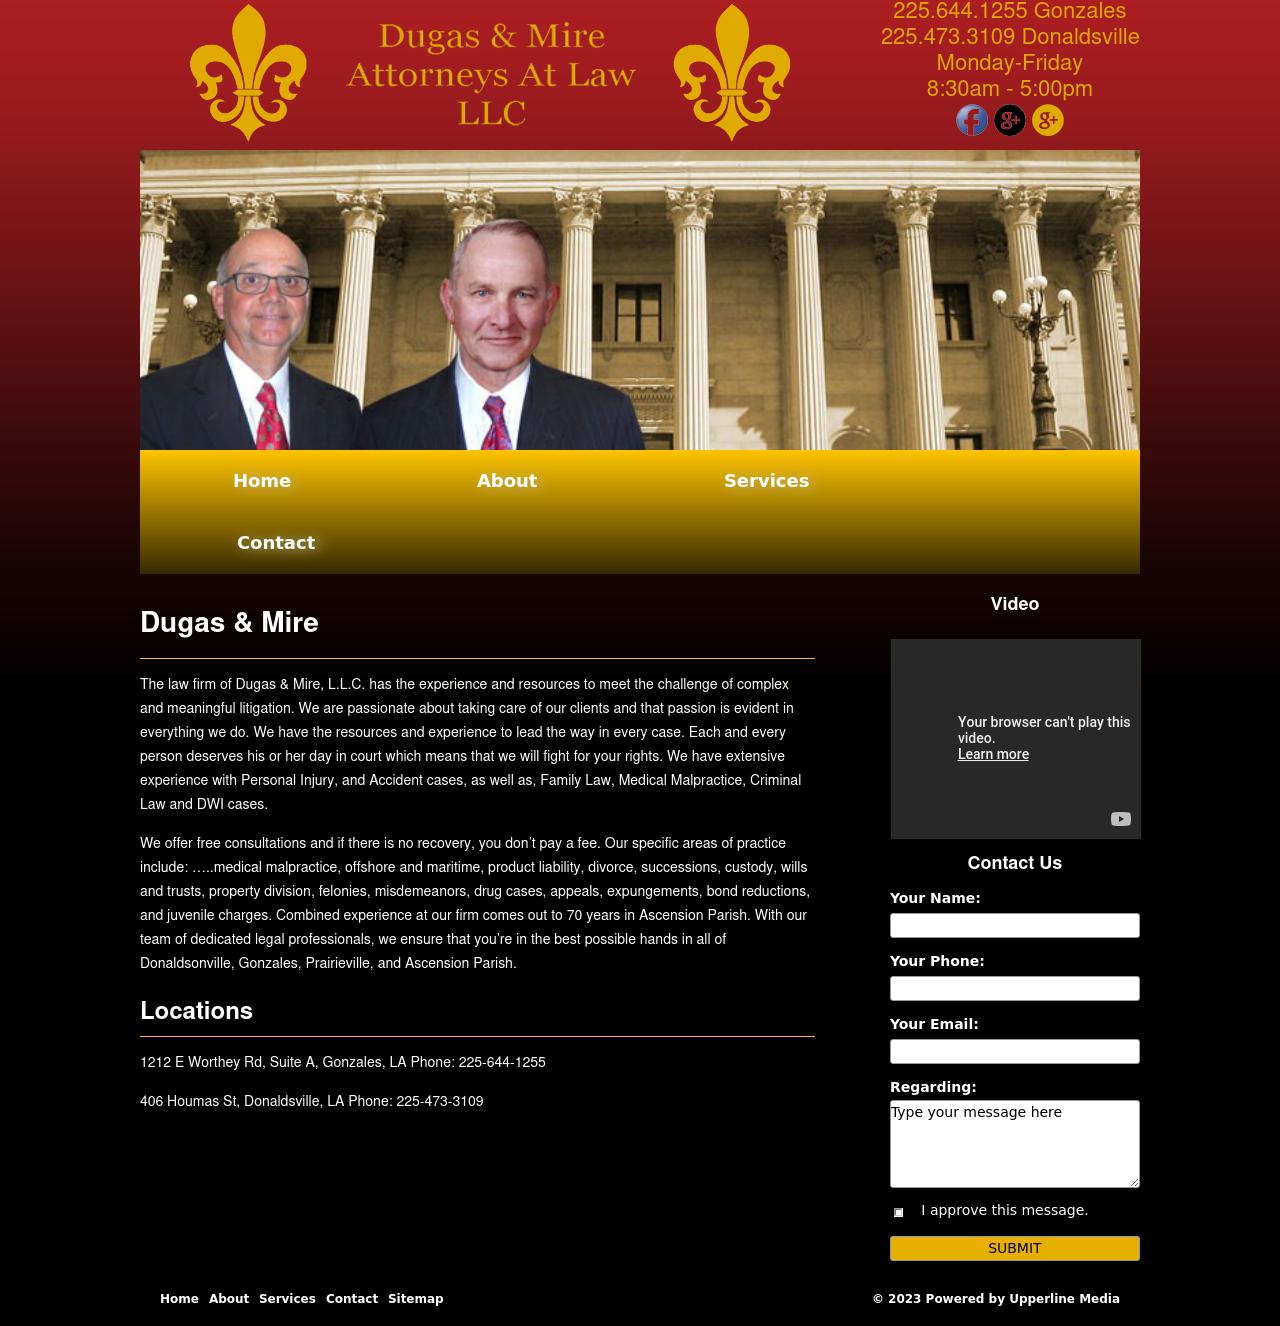 Dugas & Mire LLC - Donaldsonville LA Lawyers